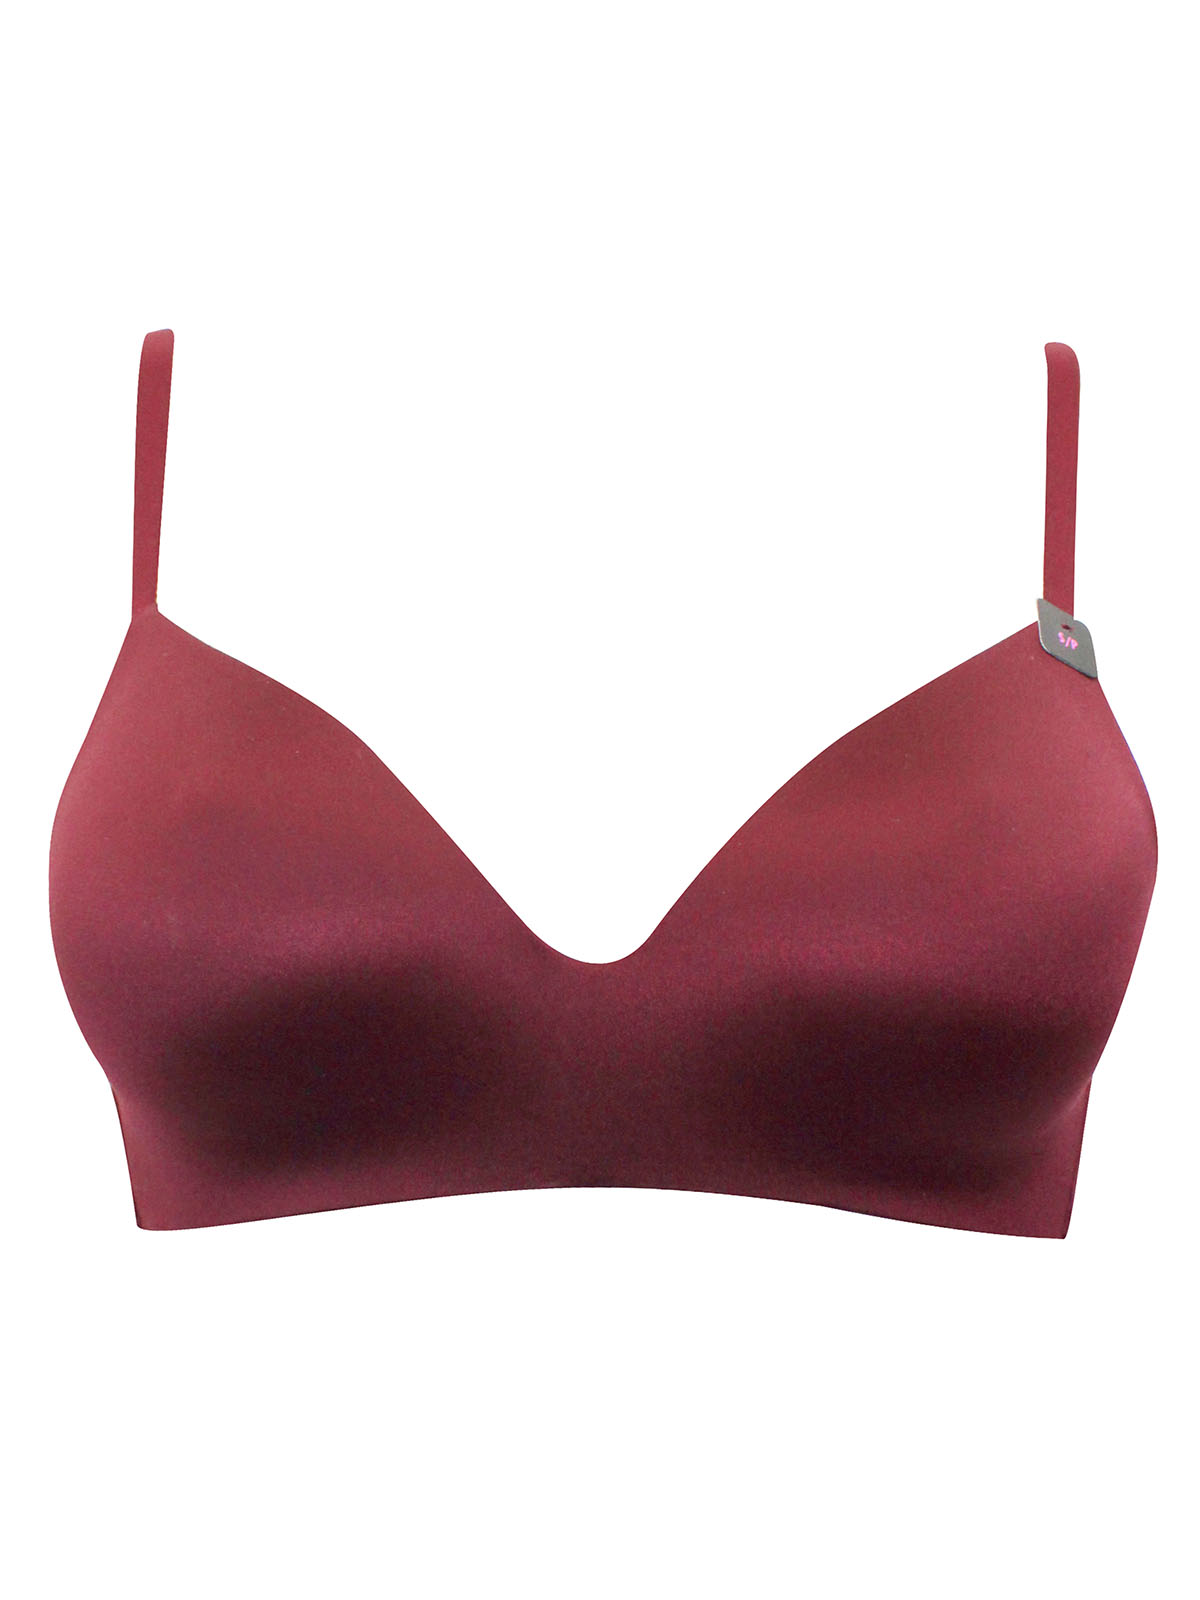 La SENZA, Intimates & Sleepwear, La Senza Lace Lightly Lined Gradient  Pink Red Bra Size 32 D C87